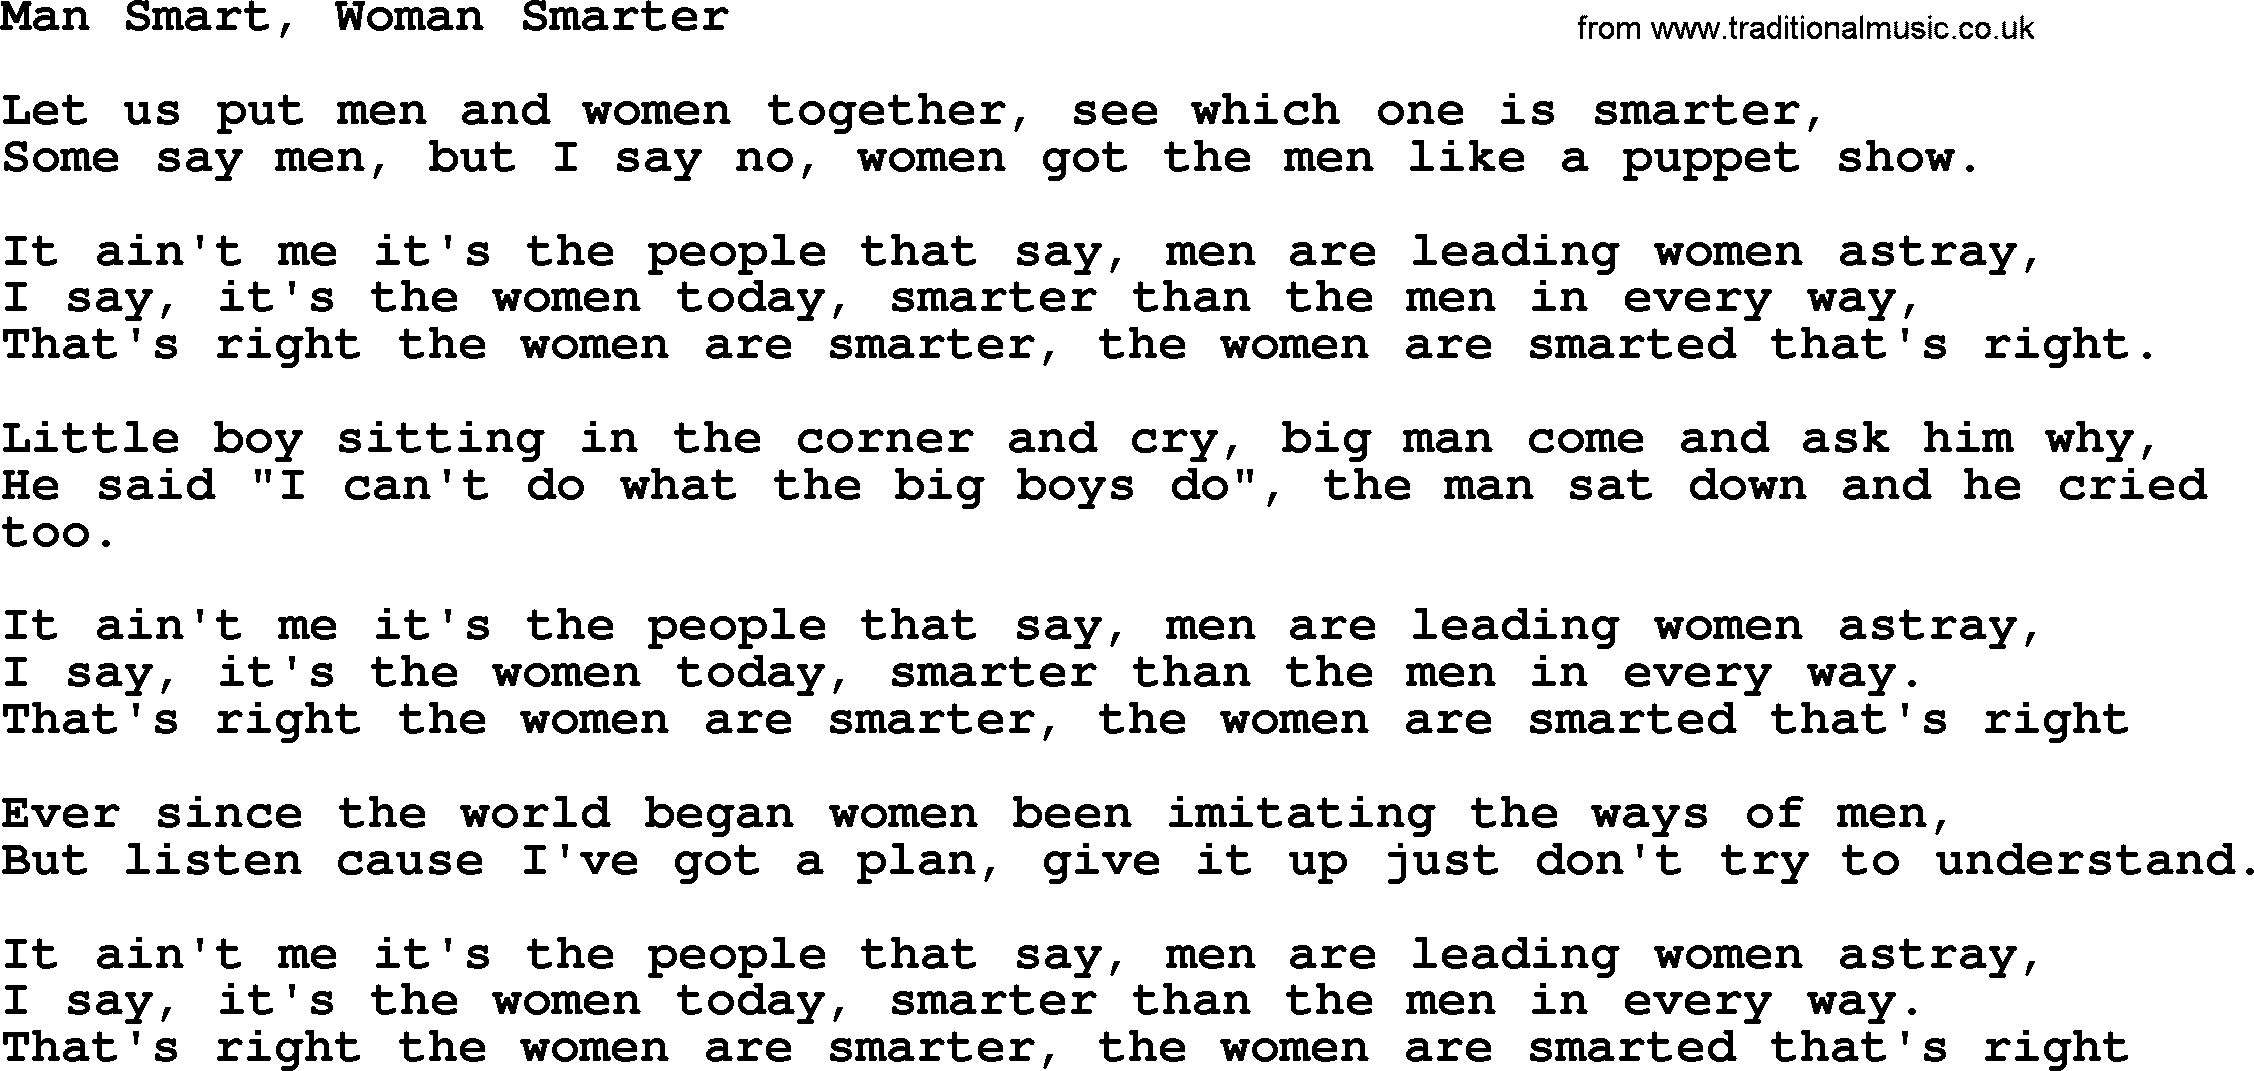 Joan Baez song Man Smart, Woman Smarter, lyrics